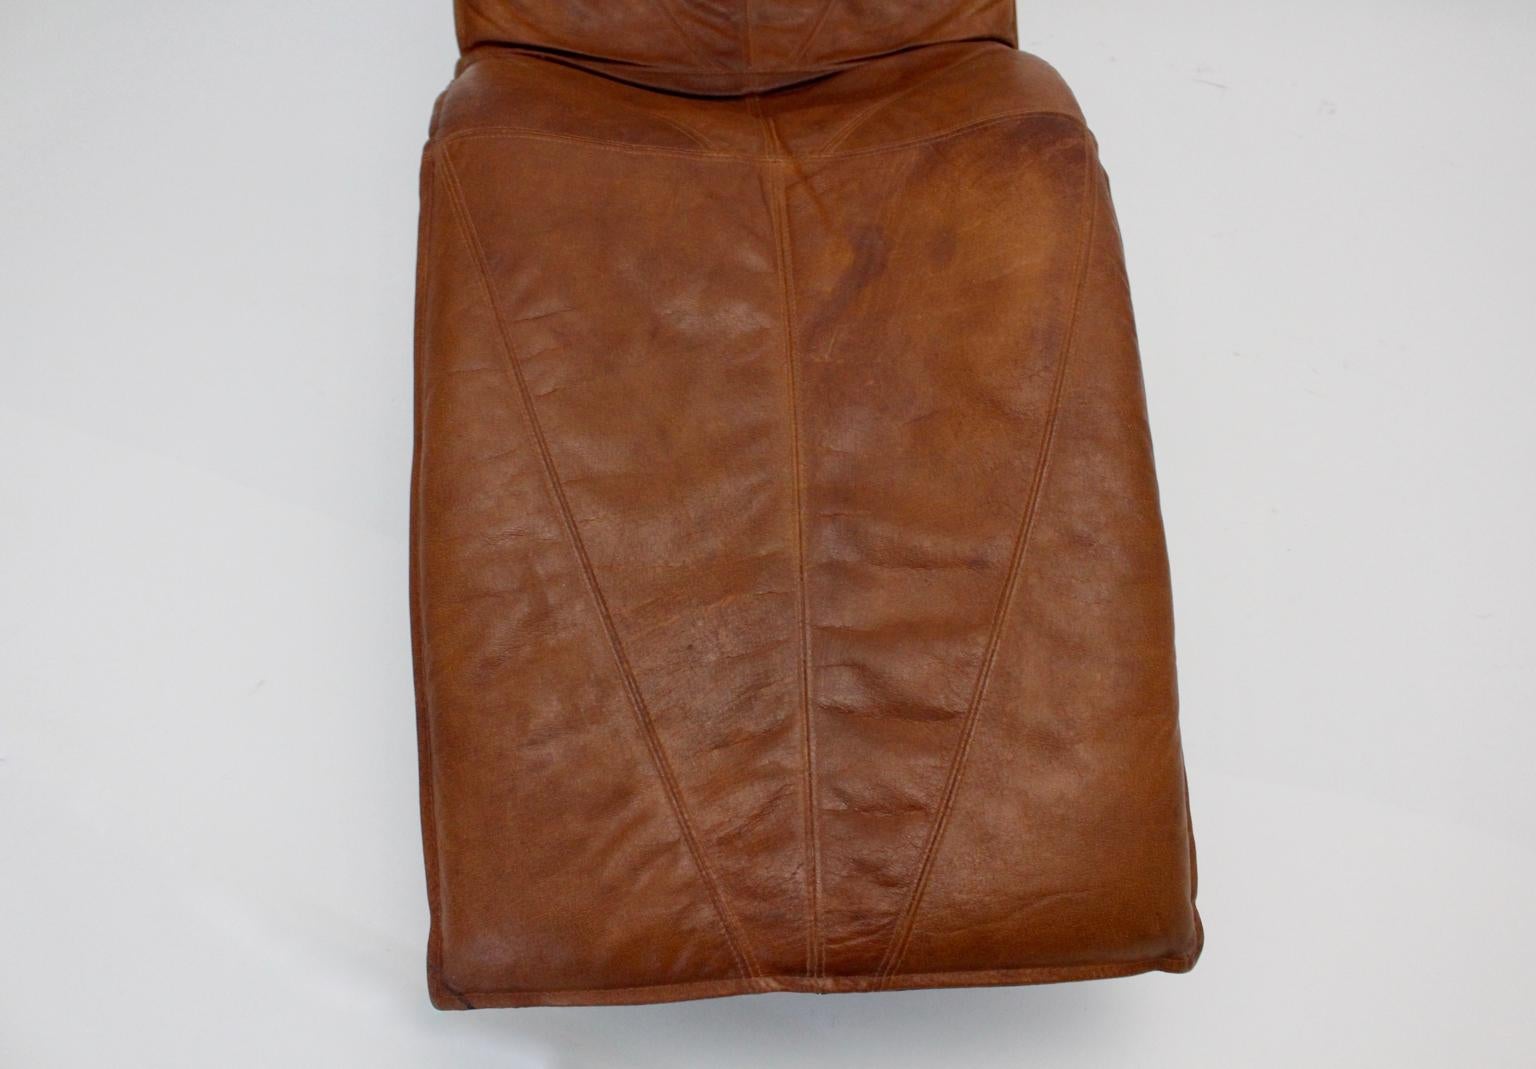 Vintage Cognac Leather Chaise Longue by Tord Bjorklund Sweden, 1970 For Sale 1